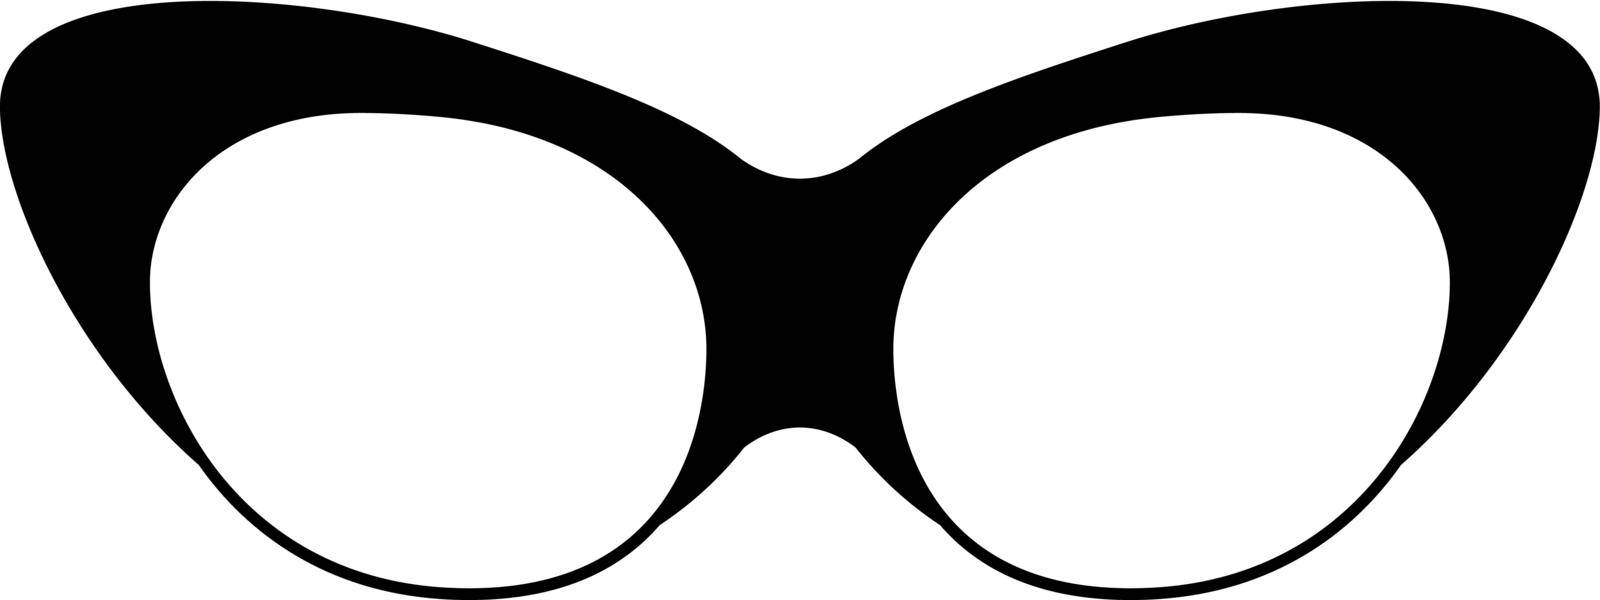 Glasses kitty icon. Cat eyes masquerade fashion glasses style isolated on white background.